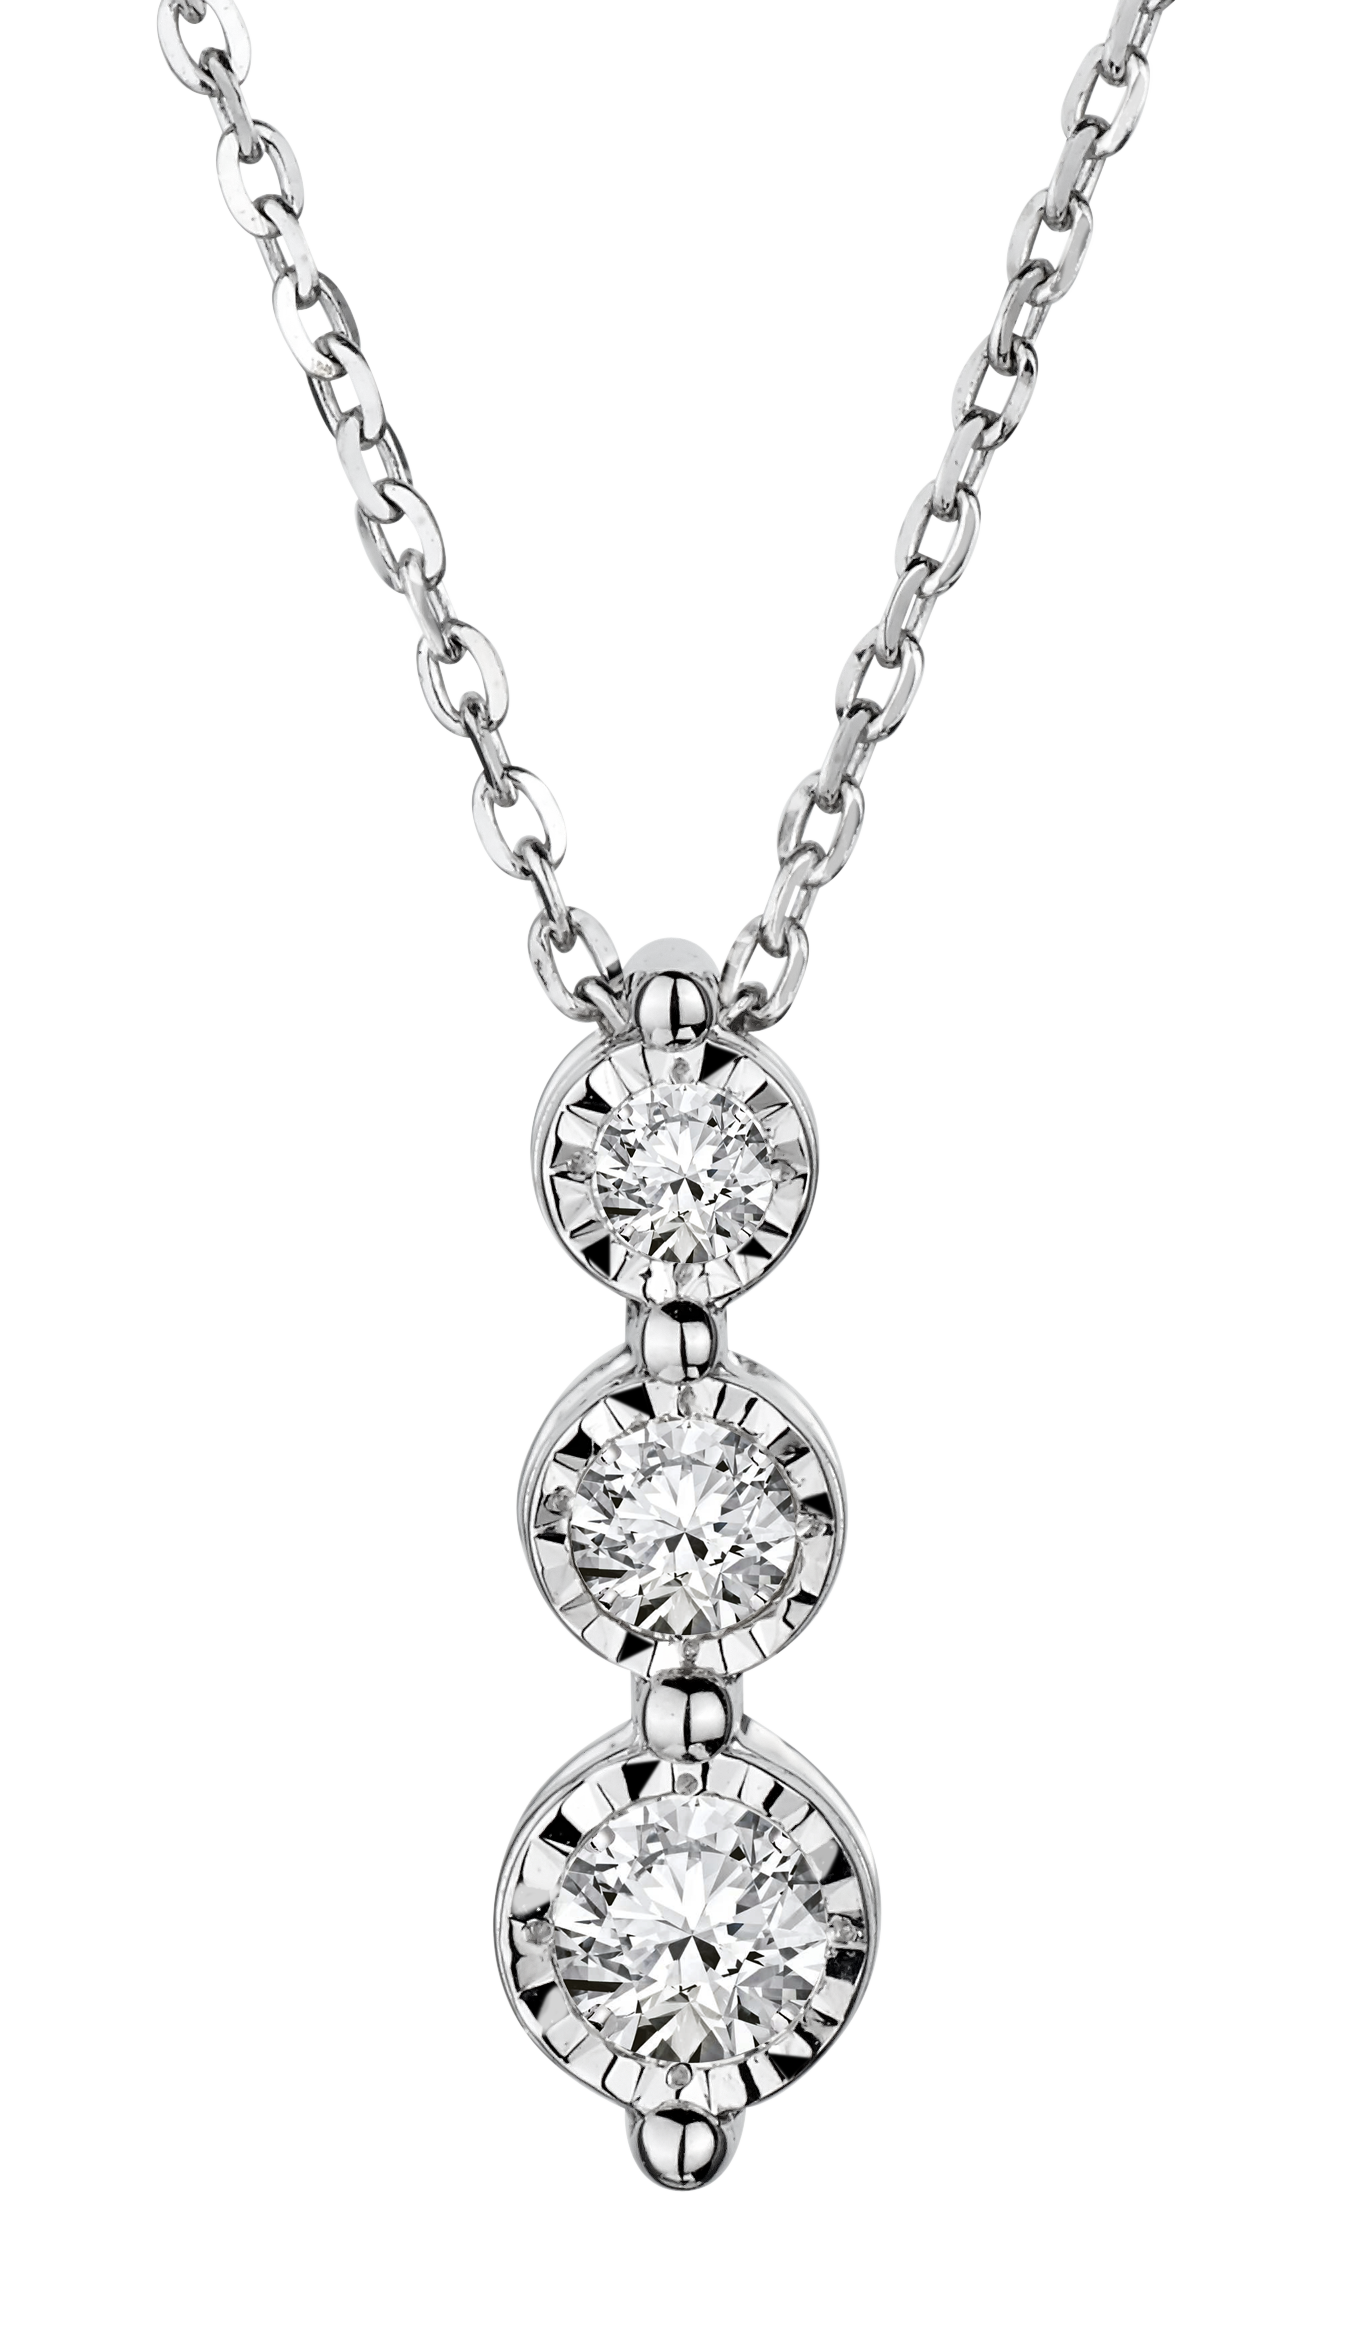 .16 Carat of Diamonds,  "Past, Present, Future" Pendant,  10kt White Gold. Necklaces and Pendants. Griffin Jewellery Designs.